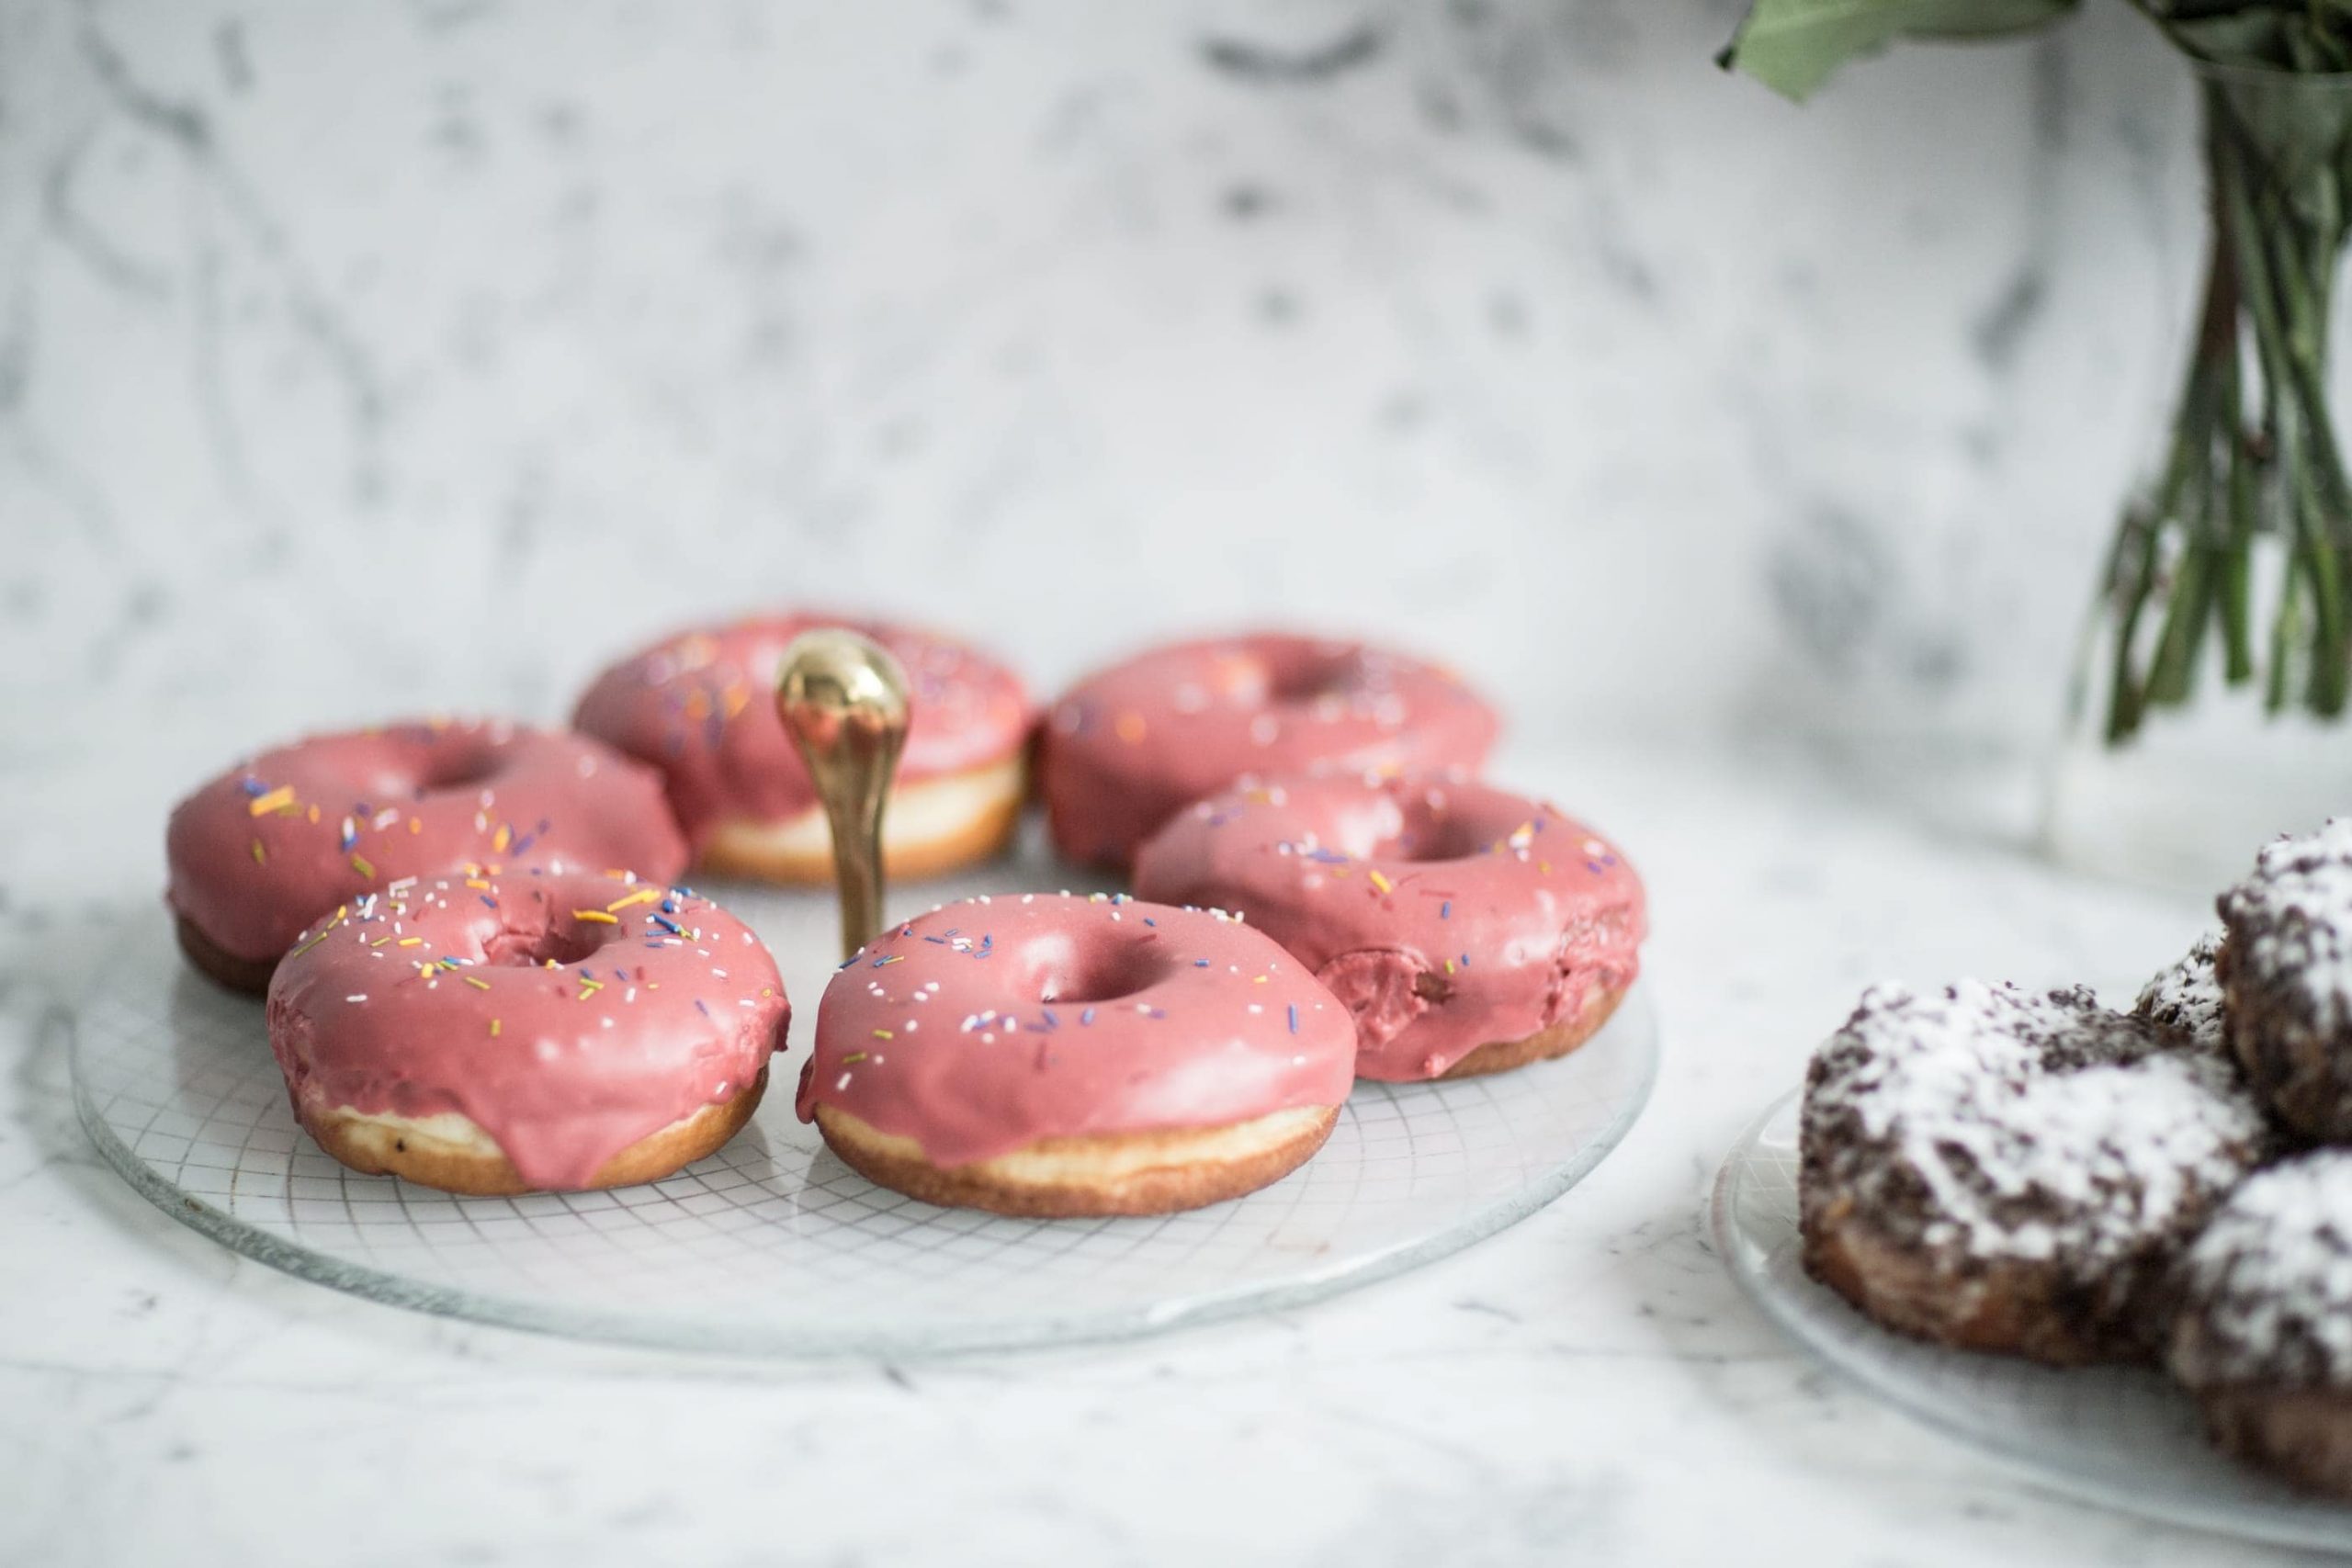 donut display - donut day - diana - pink donuts on donut tray